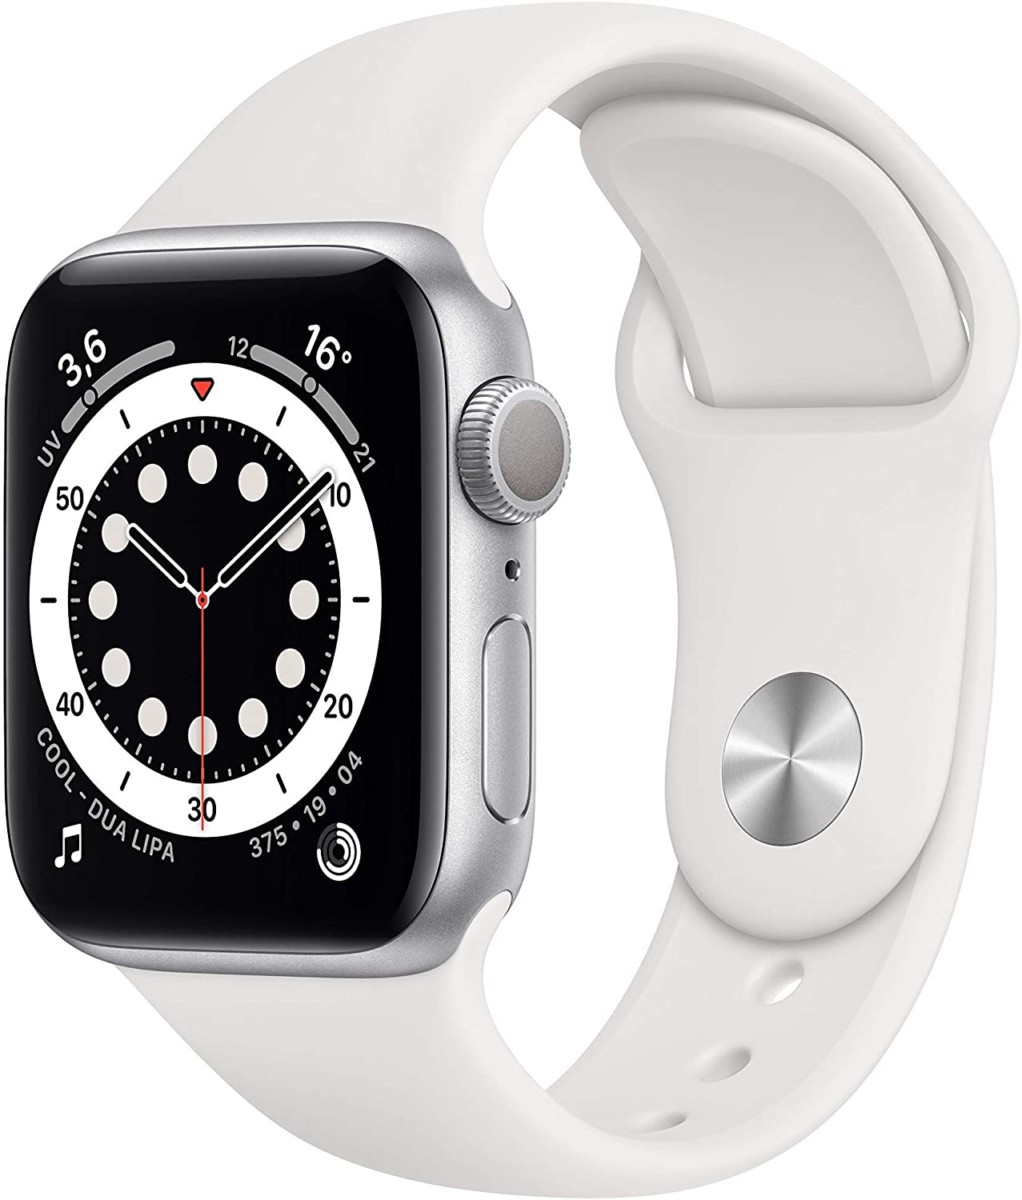 Apple Watch Series 6, super offerta su Amazon